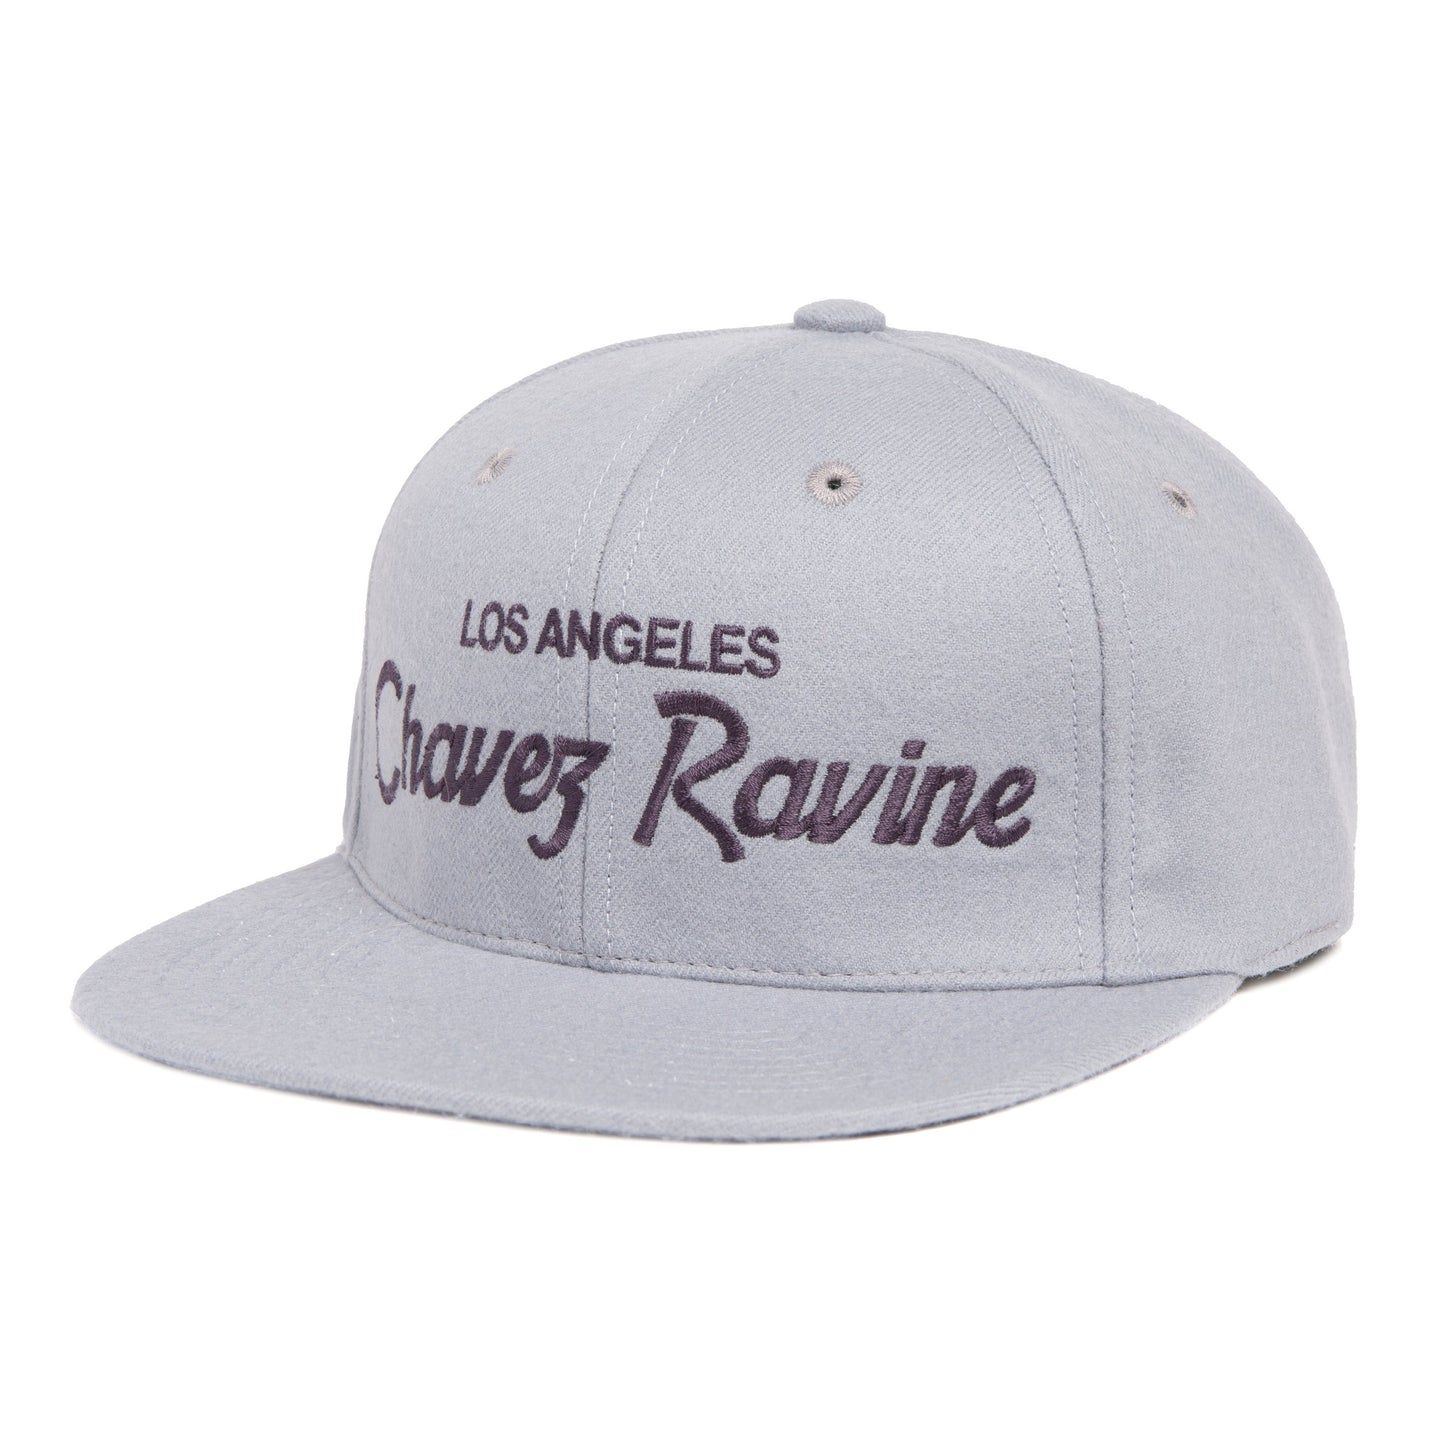 Chavez Ravine II Snapback Hat